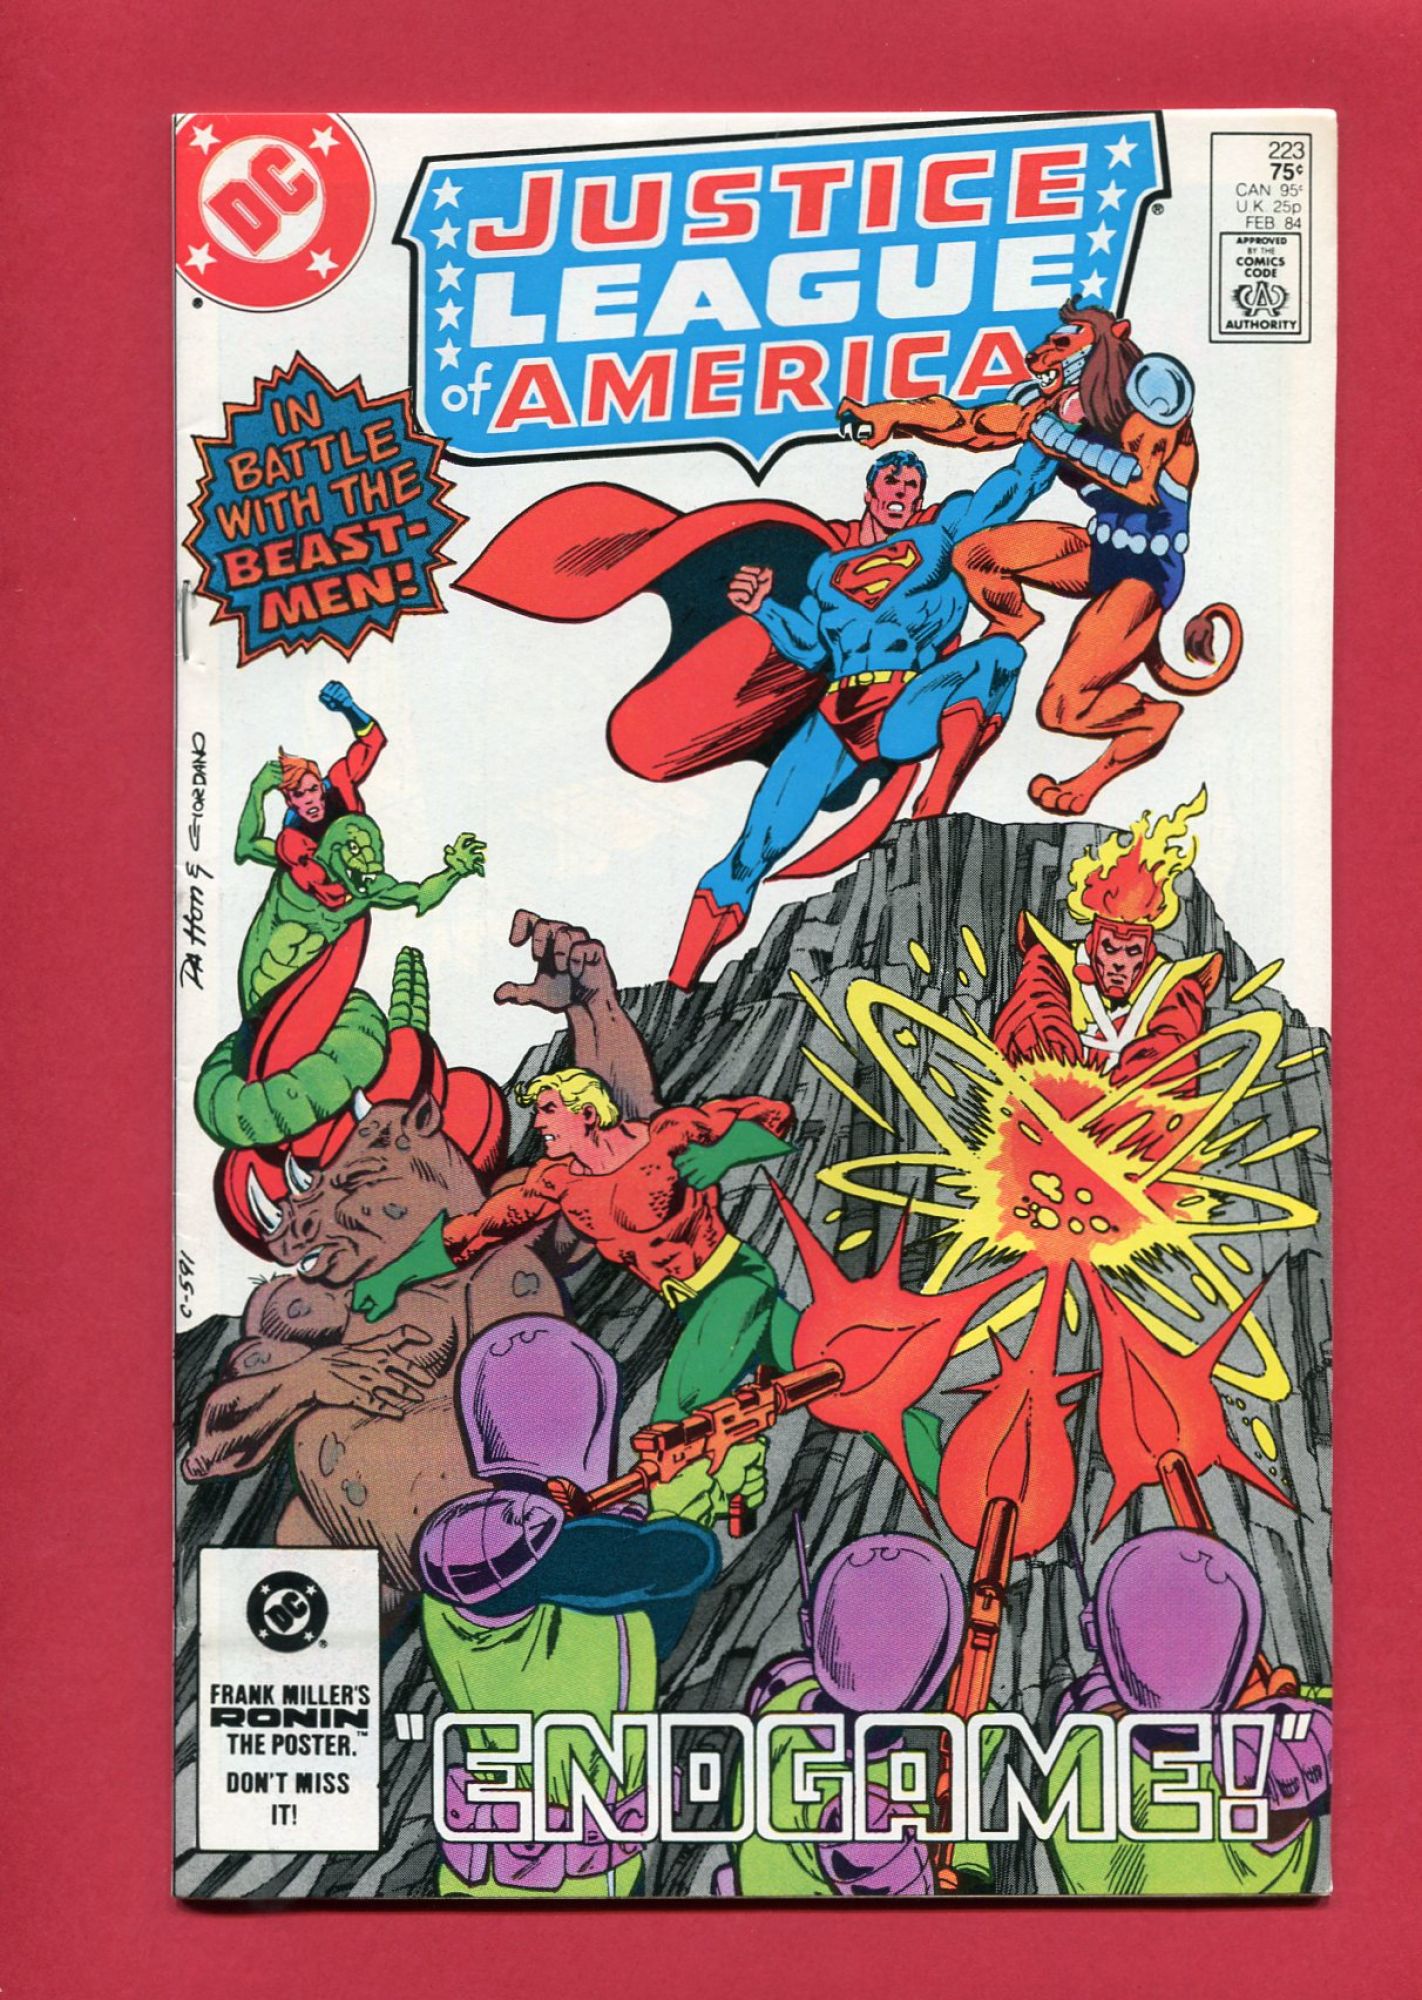 Justice League of America (Volume 1 1960) #223, Feb 1984, 9.2 NM-